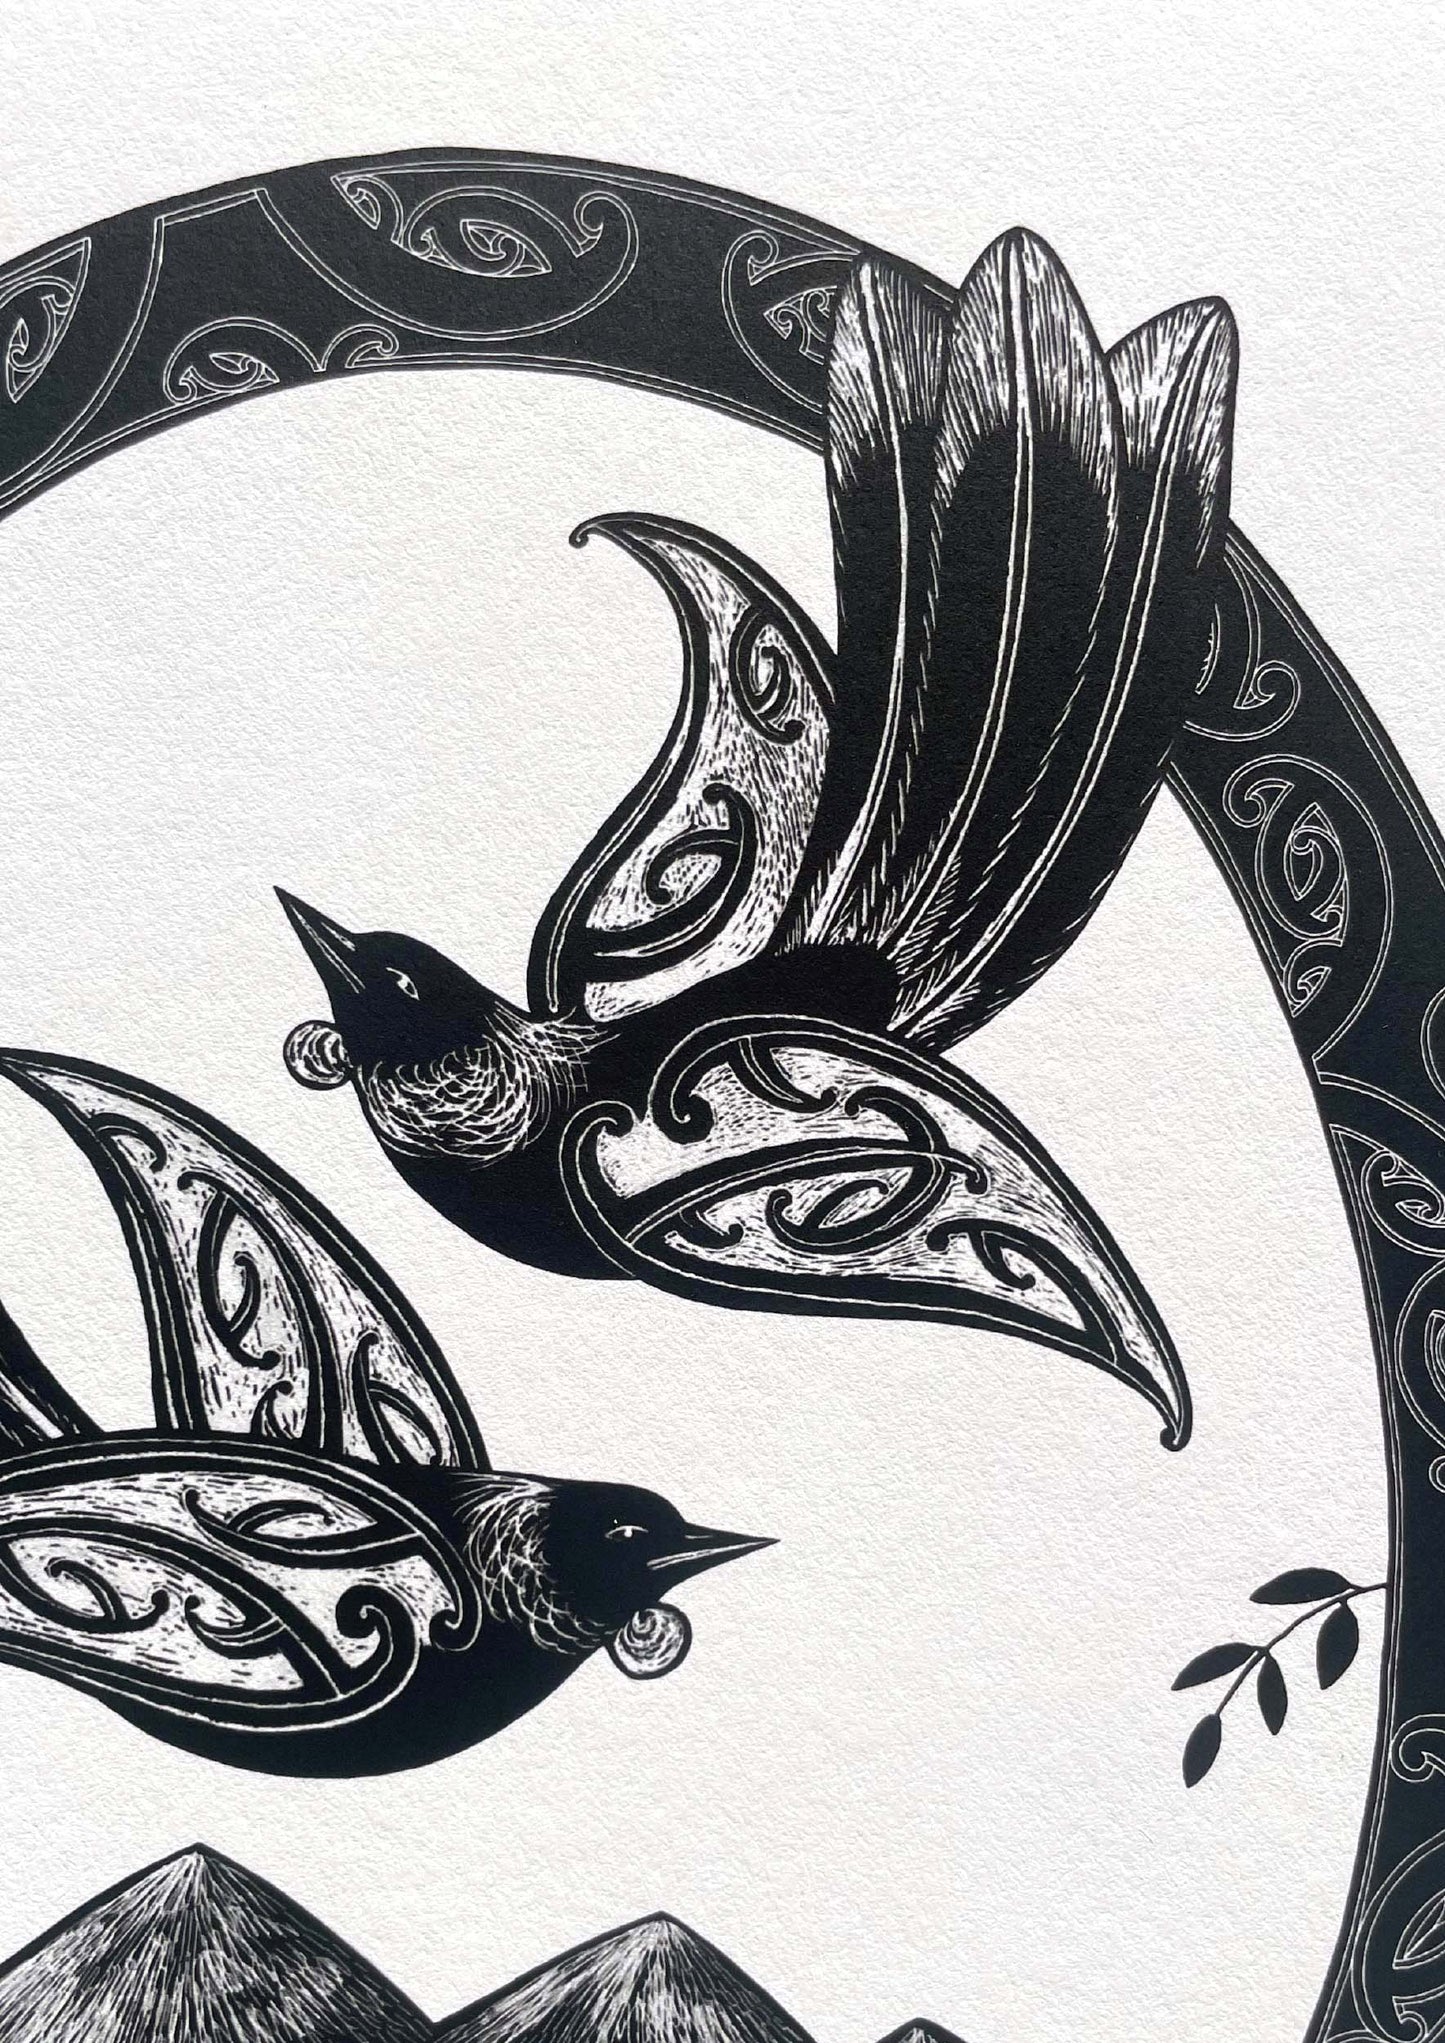 Detail of tui art print with maori design birds and sea. Te reo maori art, whaia te iti kahurangi - seek the treasure you value most dearly. Limited edition nz art print by Amber Smith